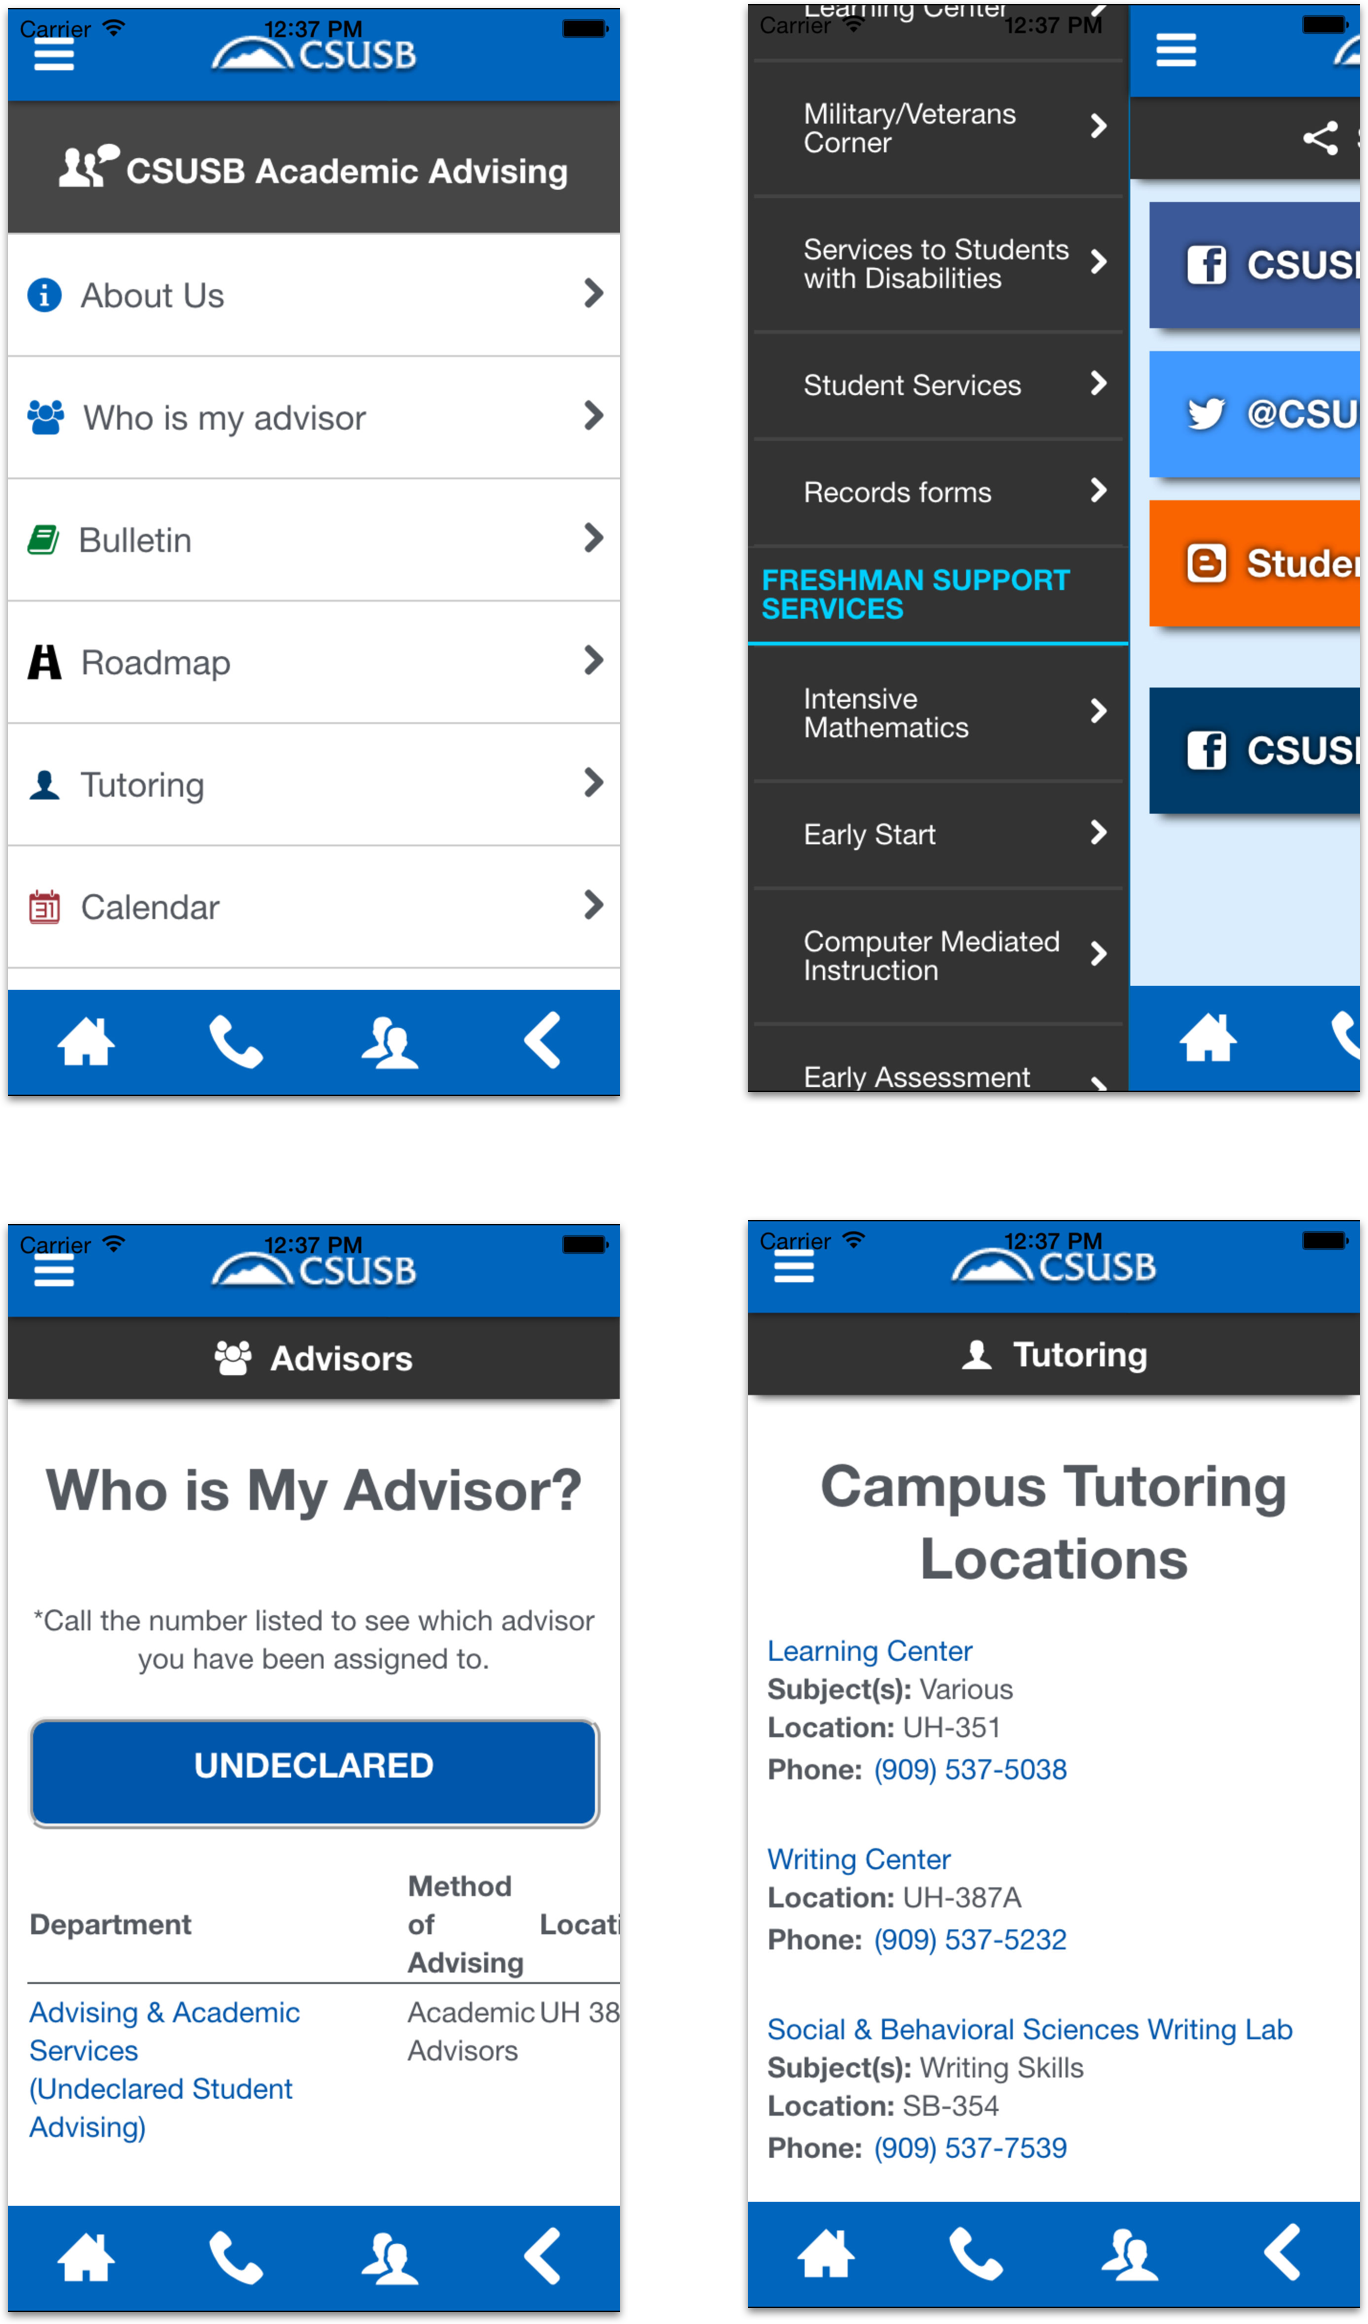 Gallery demonstrating main screens of student advising app.